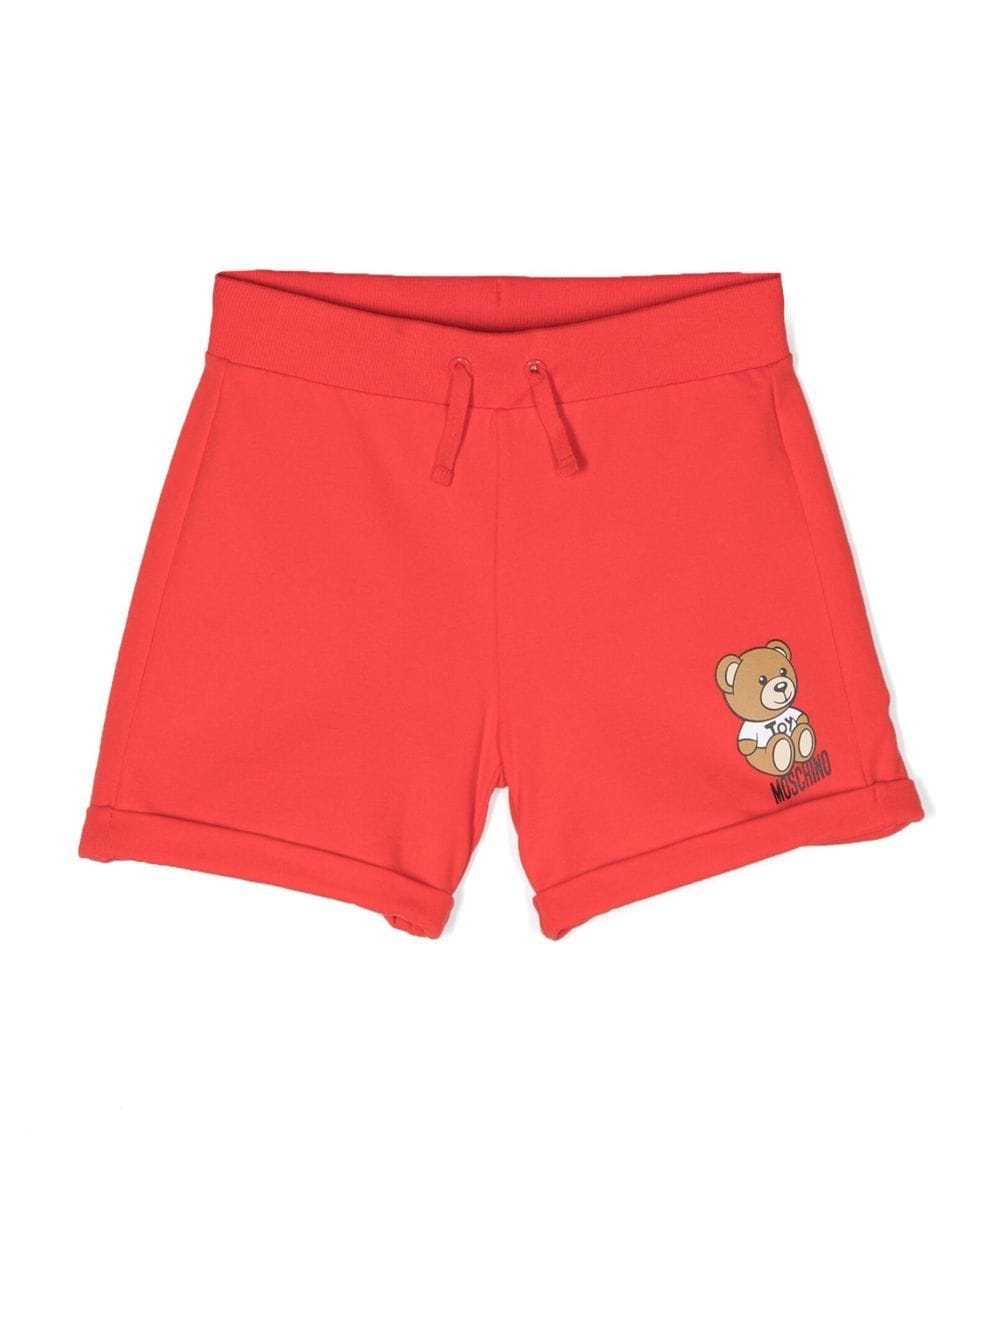 Shorts rossi Teddy Toy - Rubino Kids